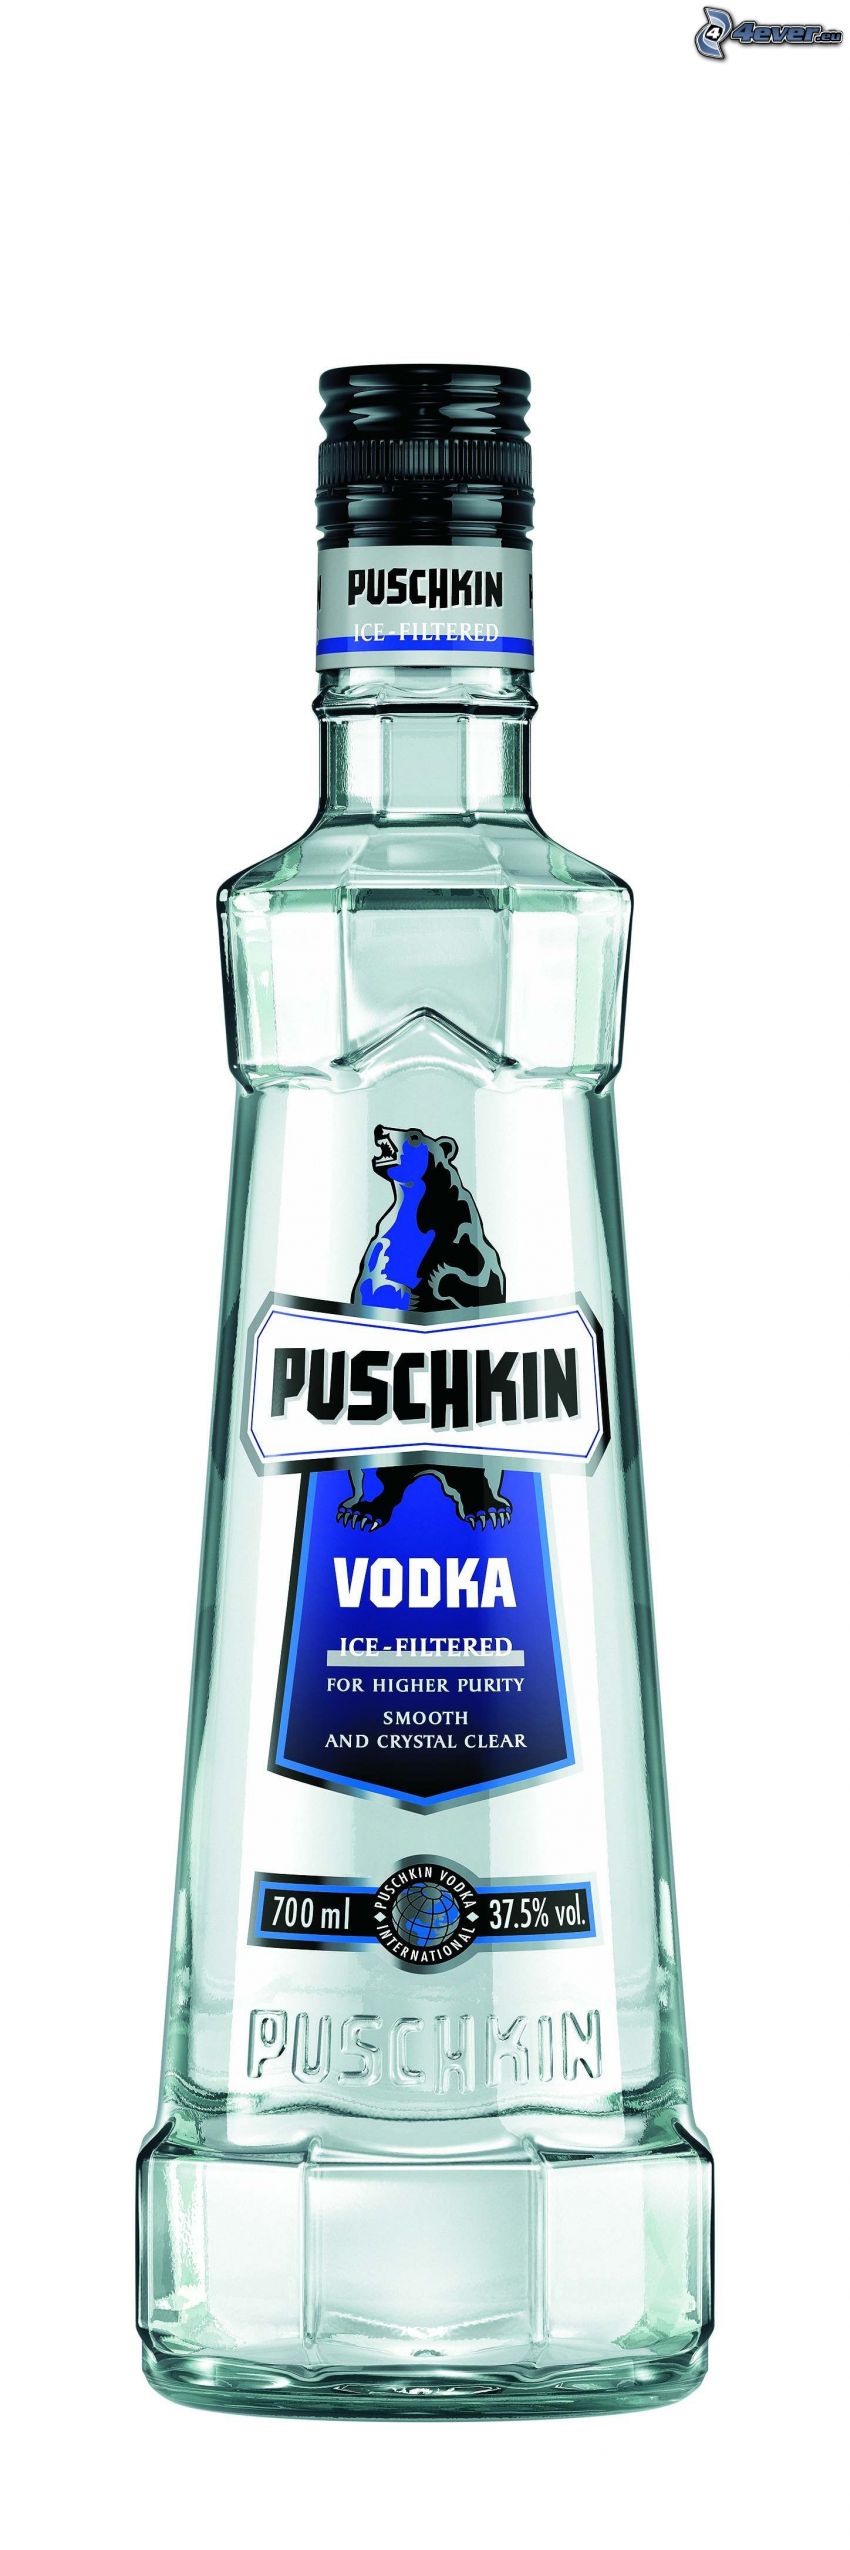 vodka Puschkin, alcool